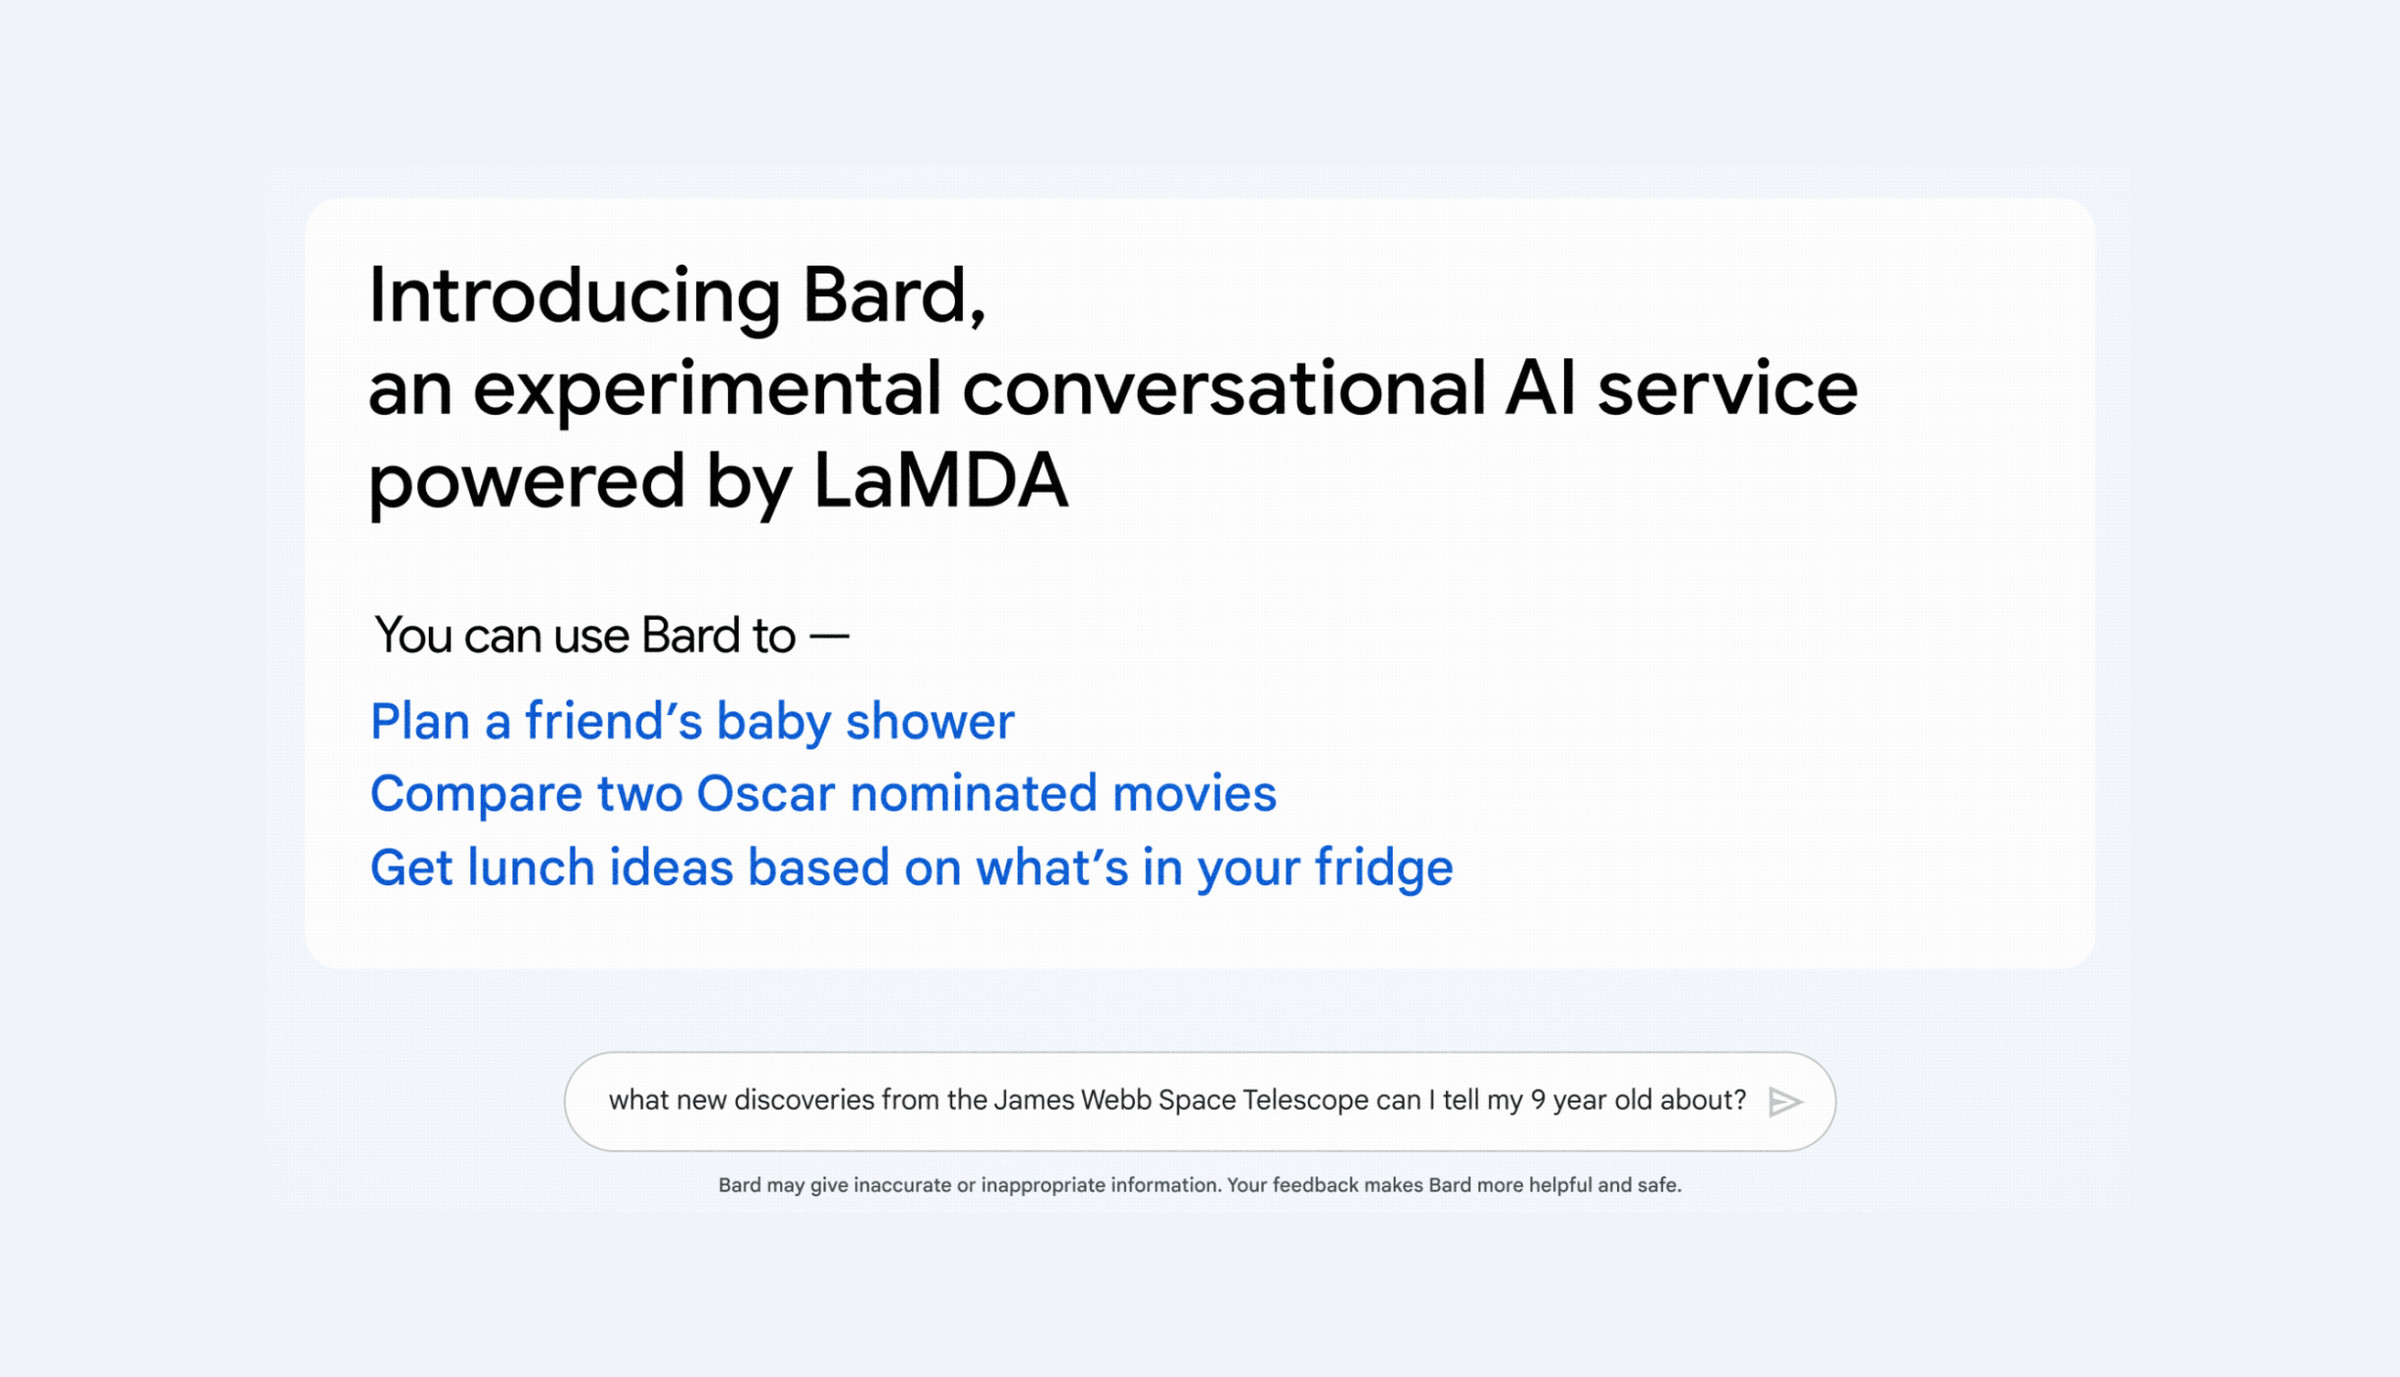 A screenshot of Bard’s interface, saying “Introducing Bard, an experimental conversational AI service powered by LaMDA.”